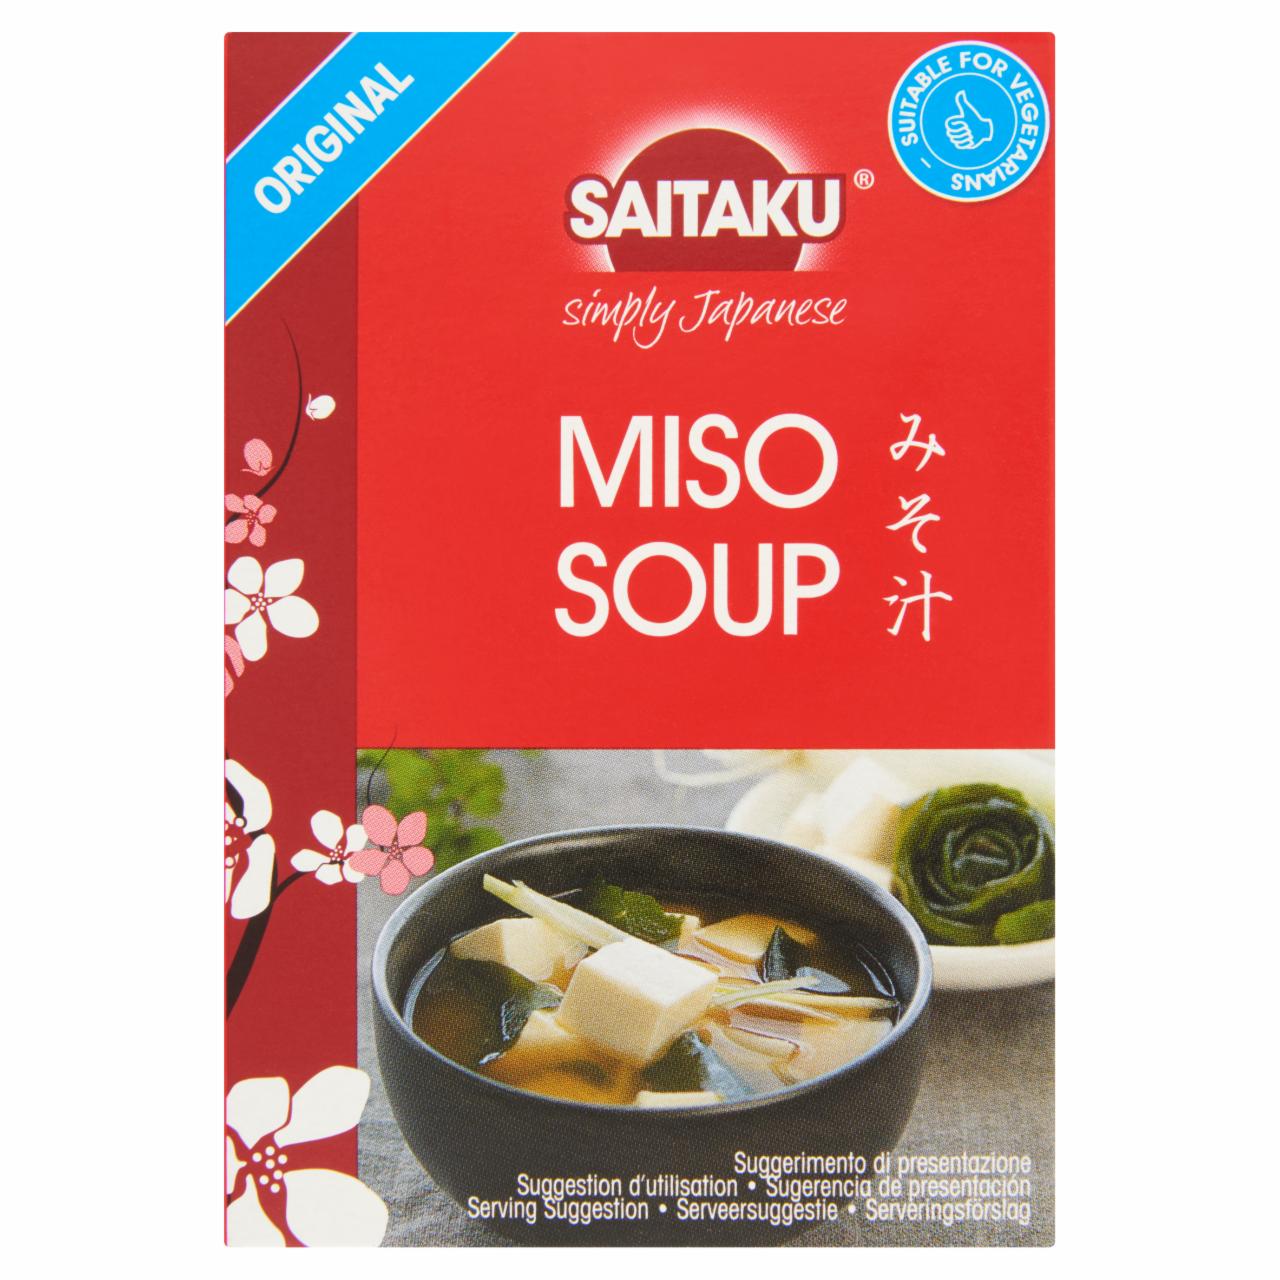 Képek - Saitaku instant Miso leves paszta 4 tasak 72 g